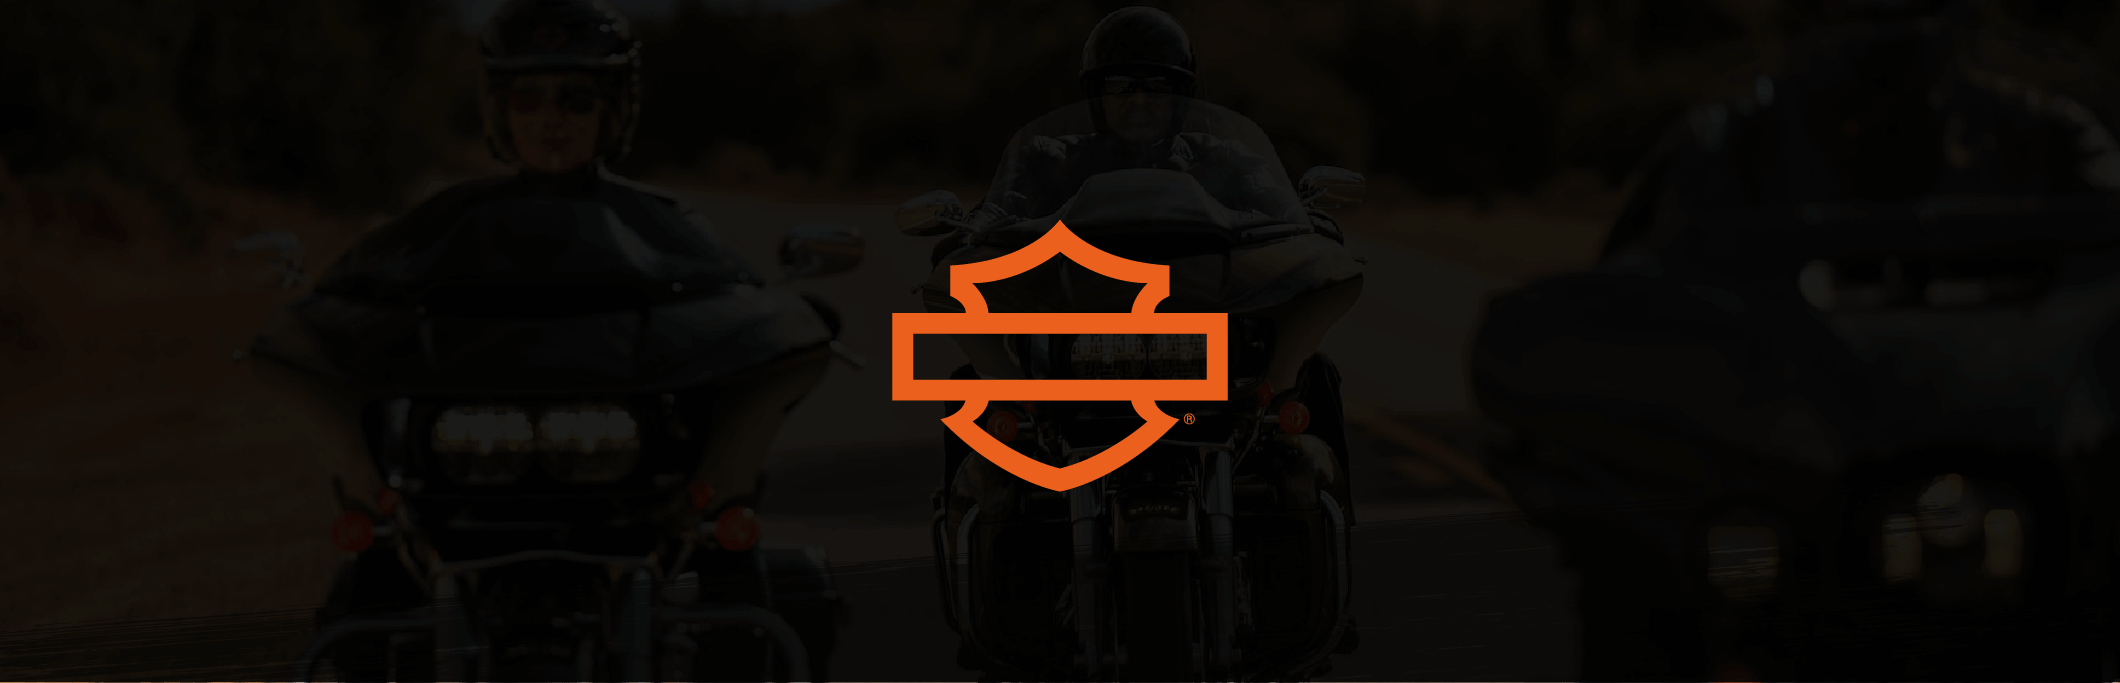 prueba tu nueva Harley Davidson Cádiz